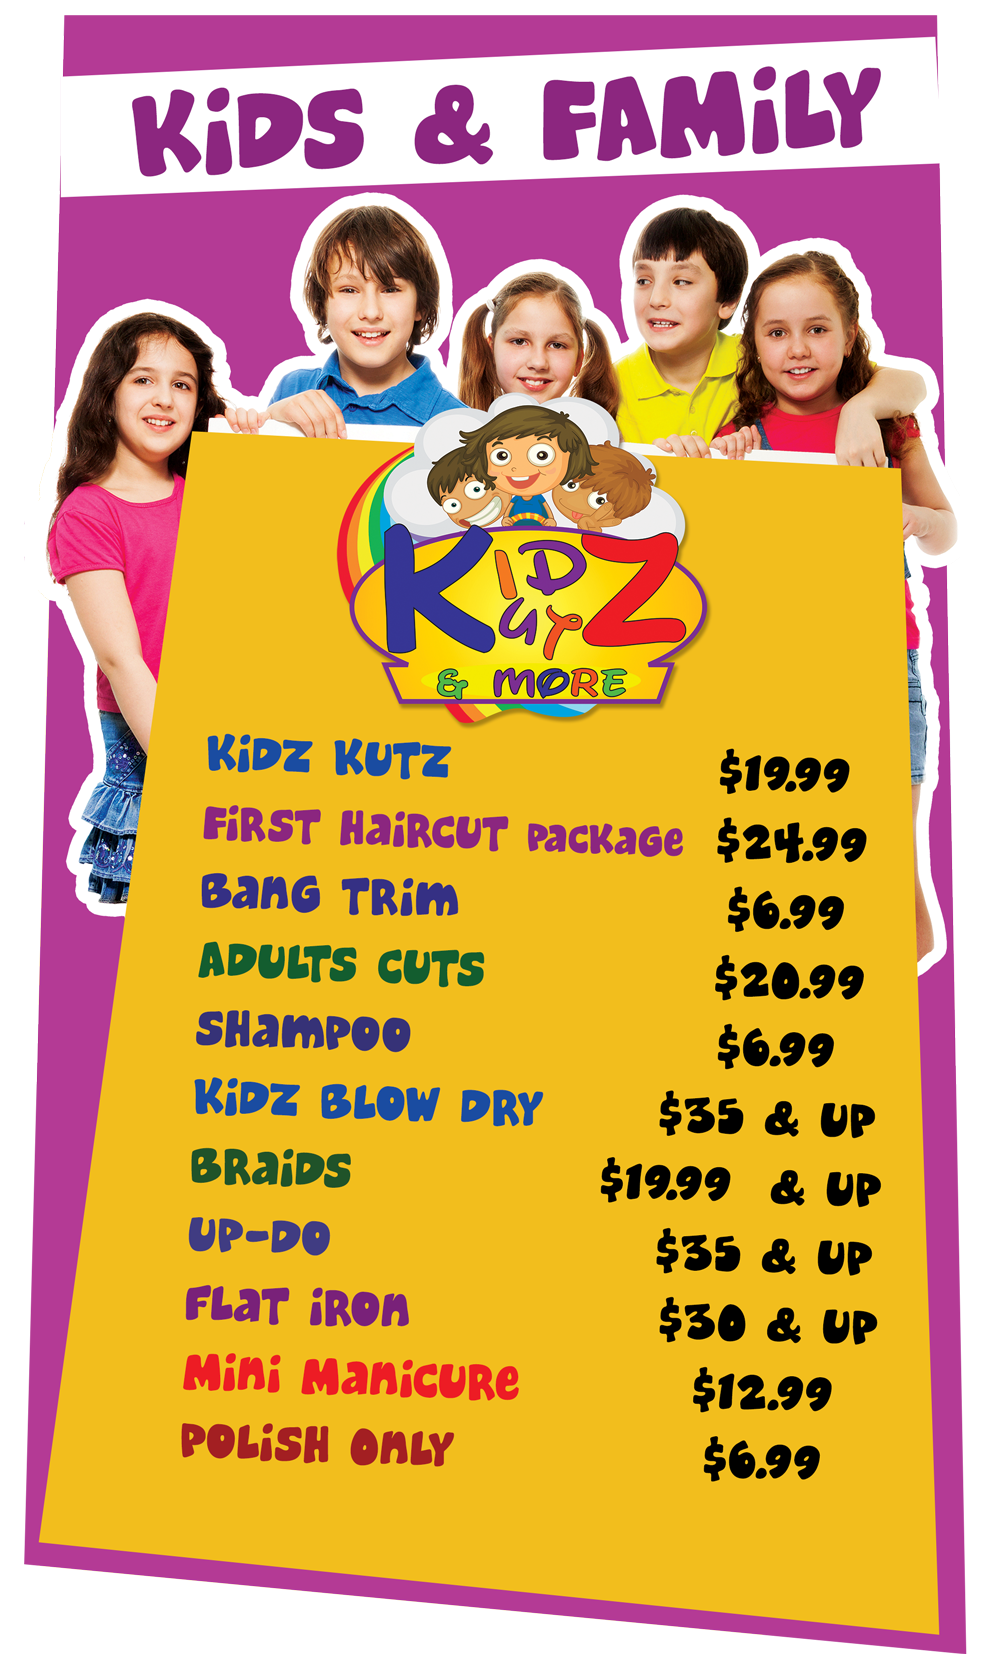 Kids Hair Salon | Katy | Sugar Land | Richmond | Cinco Ranch | Houston |  kidz kutz n more | Kids Hair Salon | Haircut for Kids at Katy Texas |